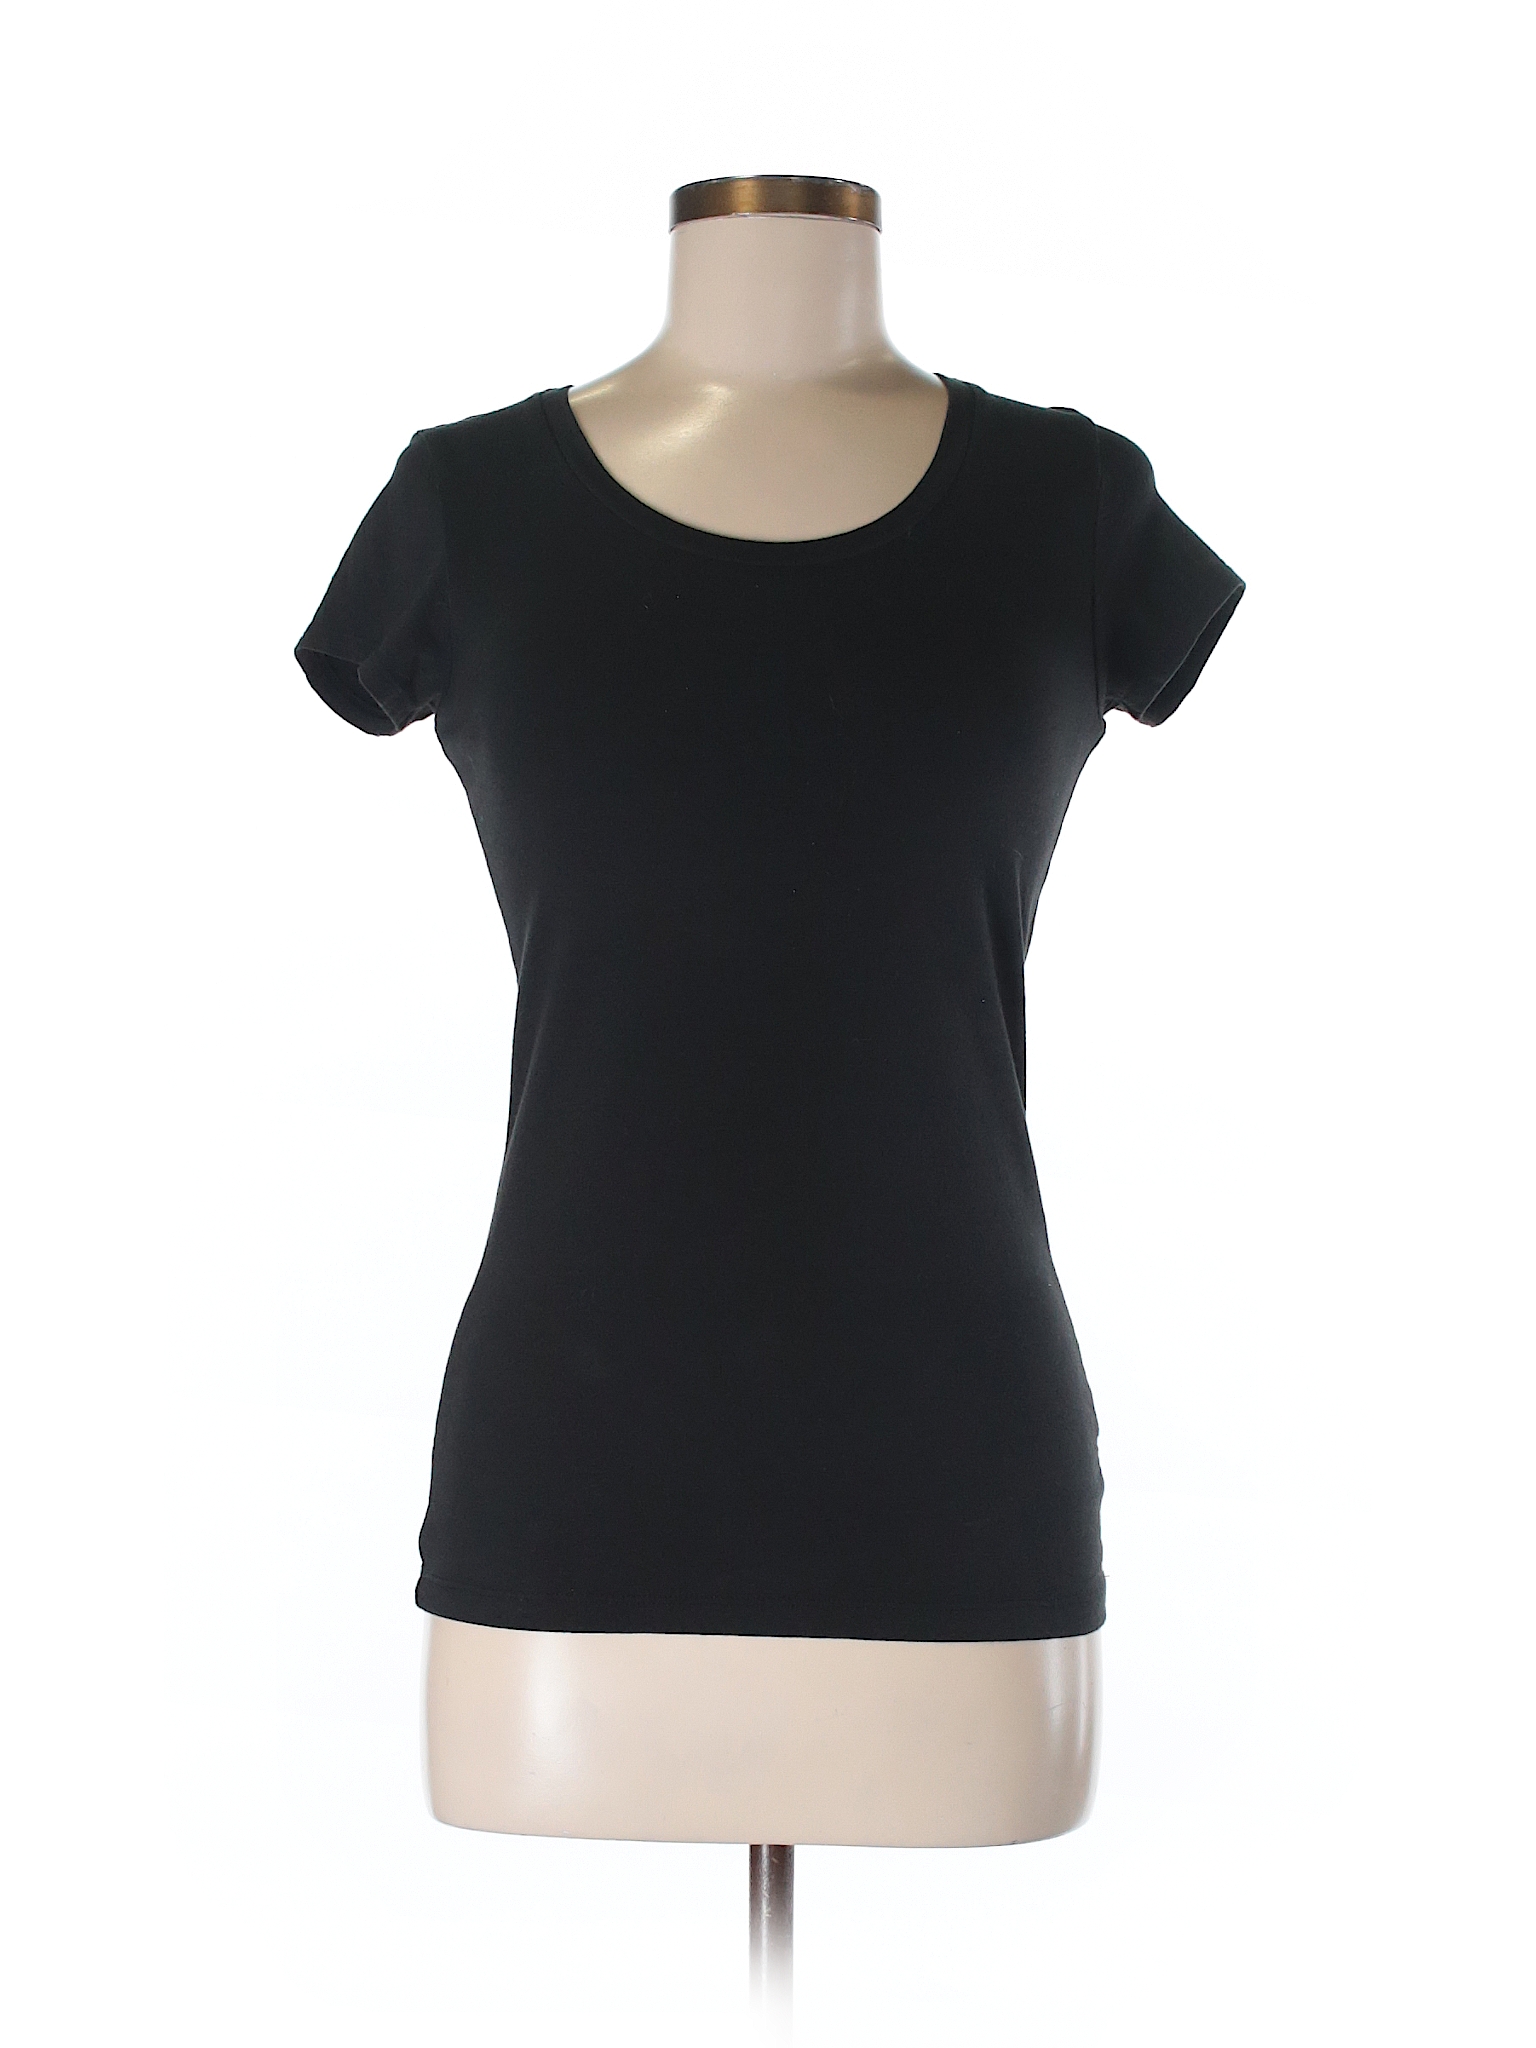 Cynthia Rowley TJX Solid Black Short Sleeve T-Shirt Size M - 62% off ...